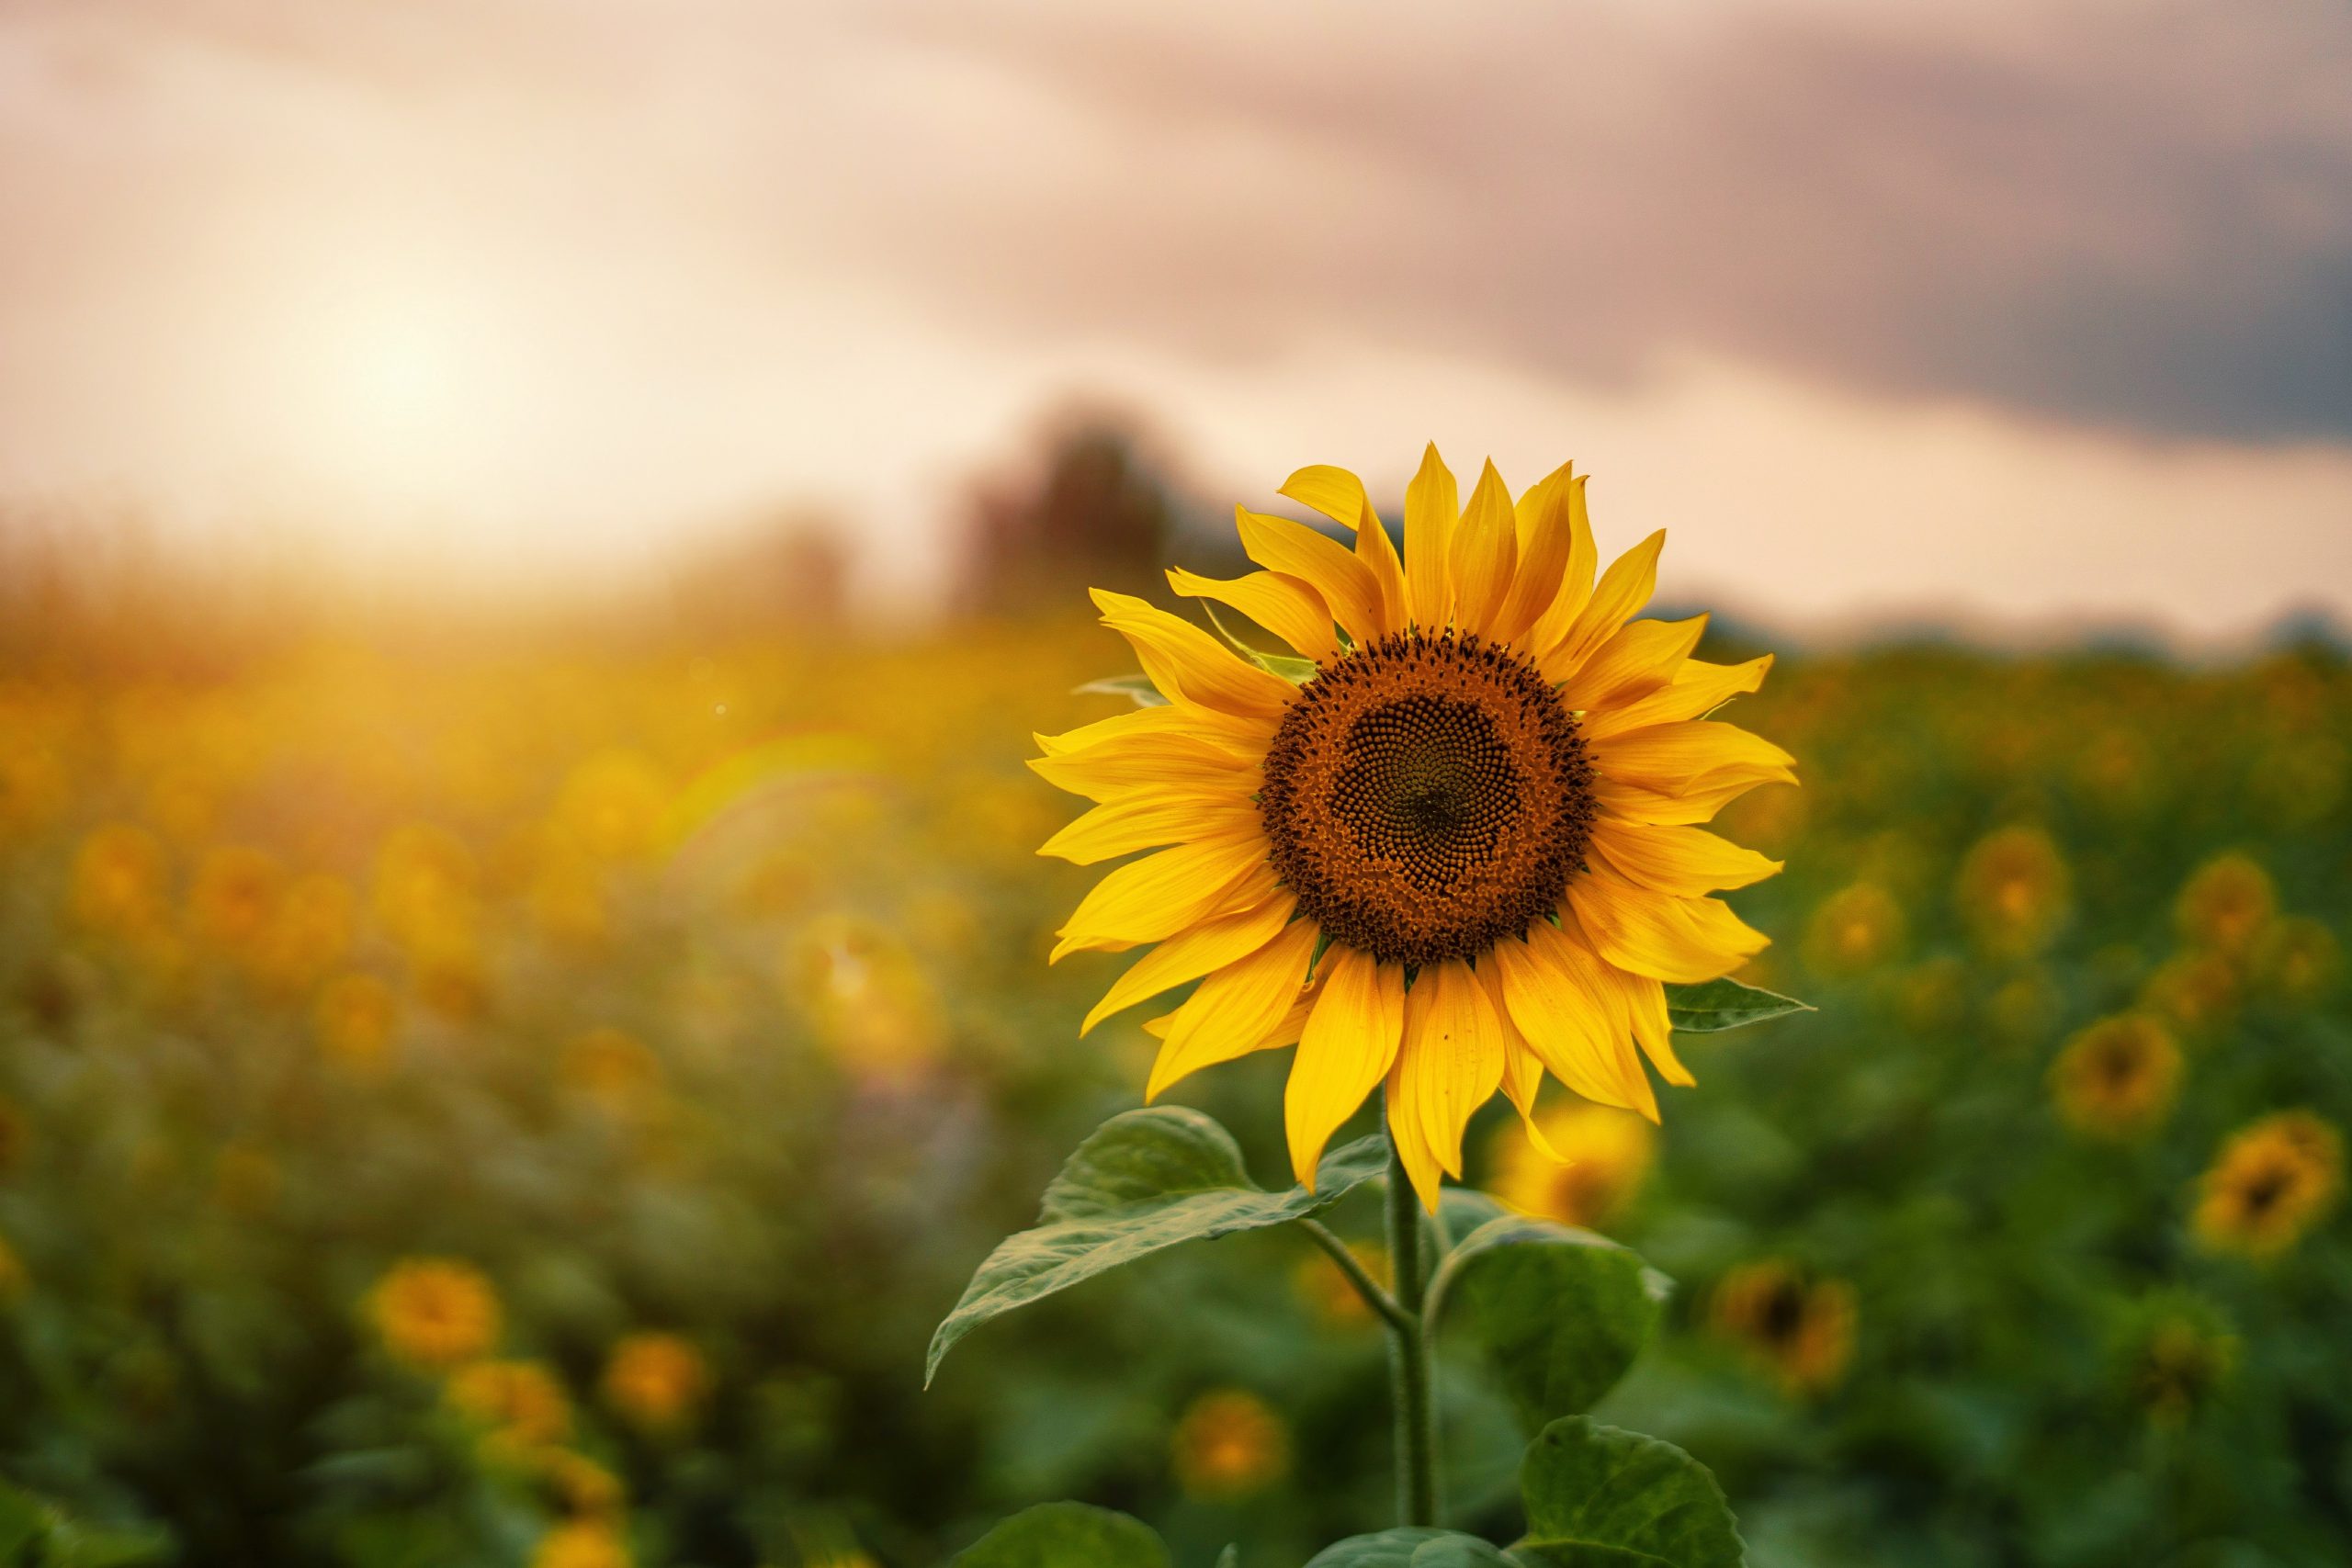 sunflower in a field of sunflowers